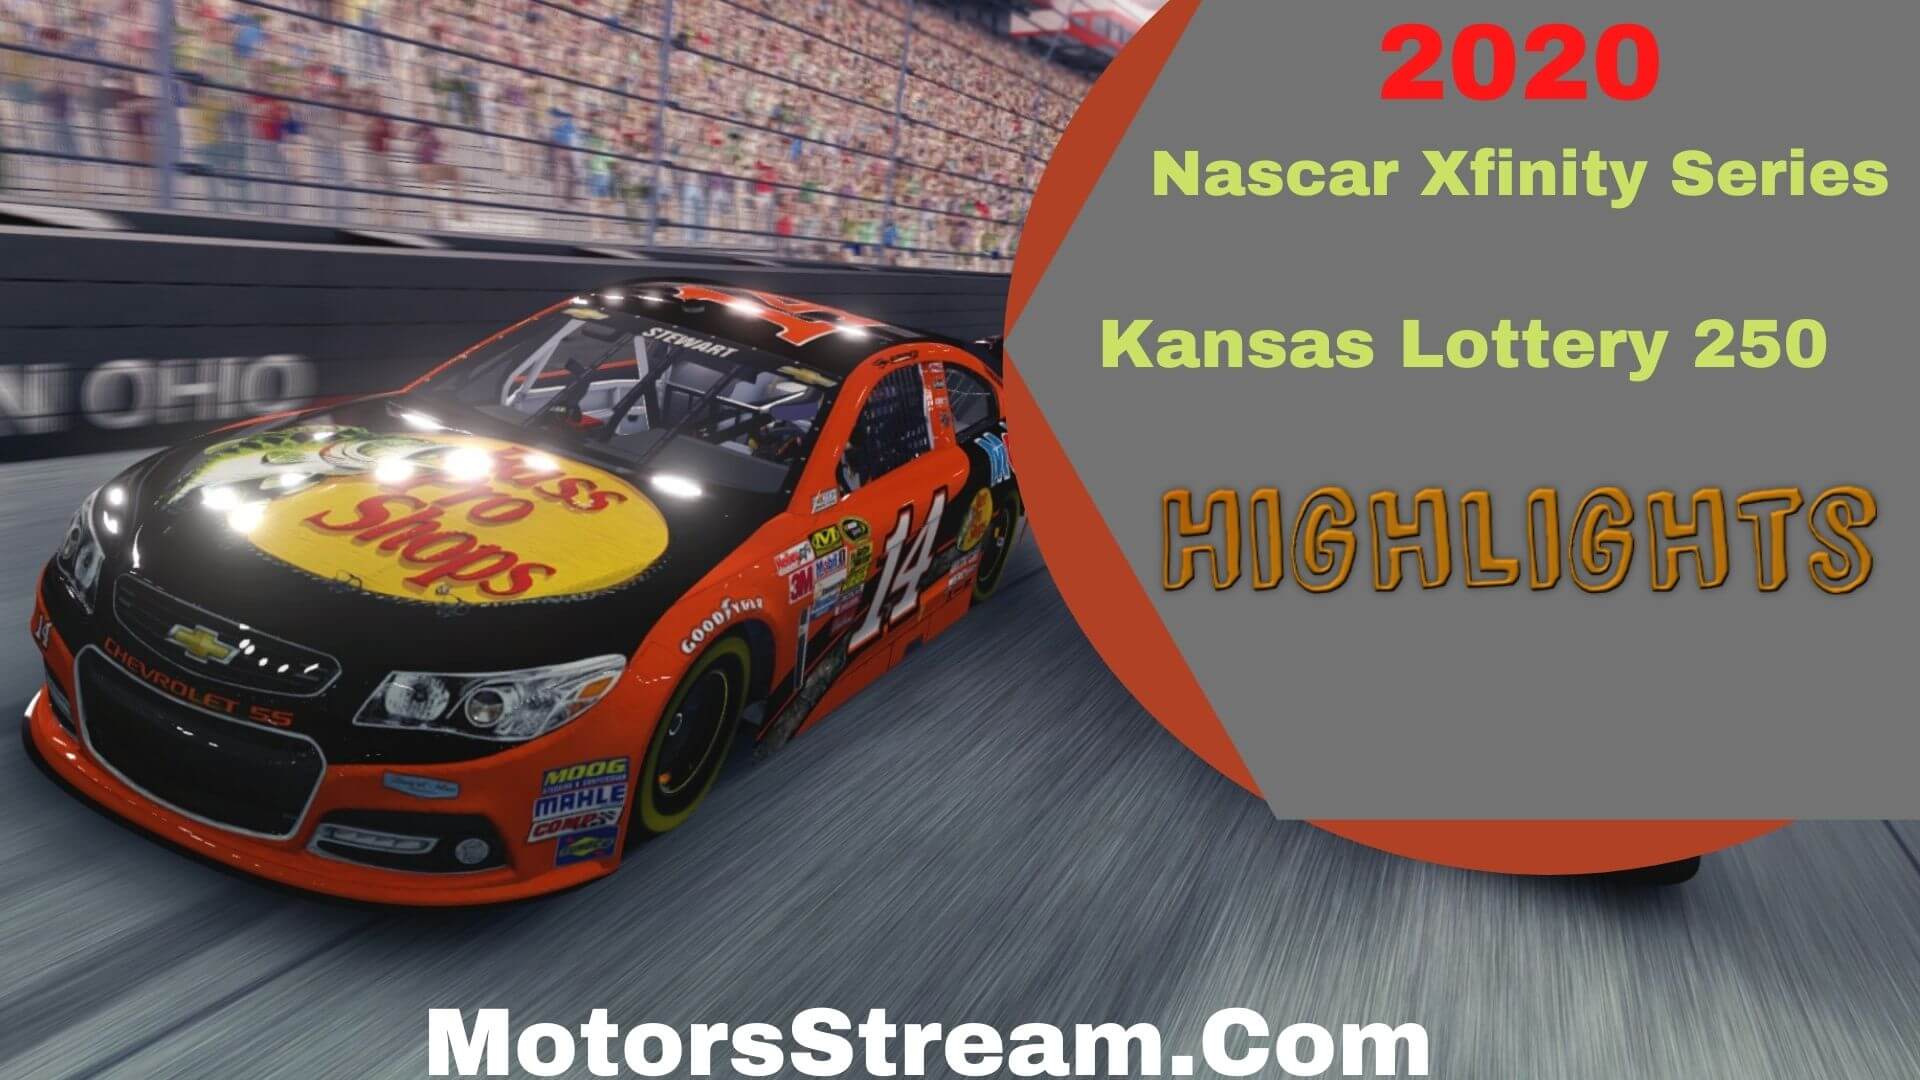 Kansas Lottery 250 Highlights 2020 Nascar Xfinity Series